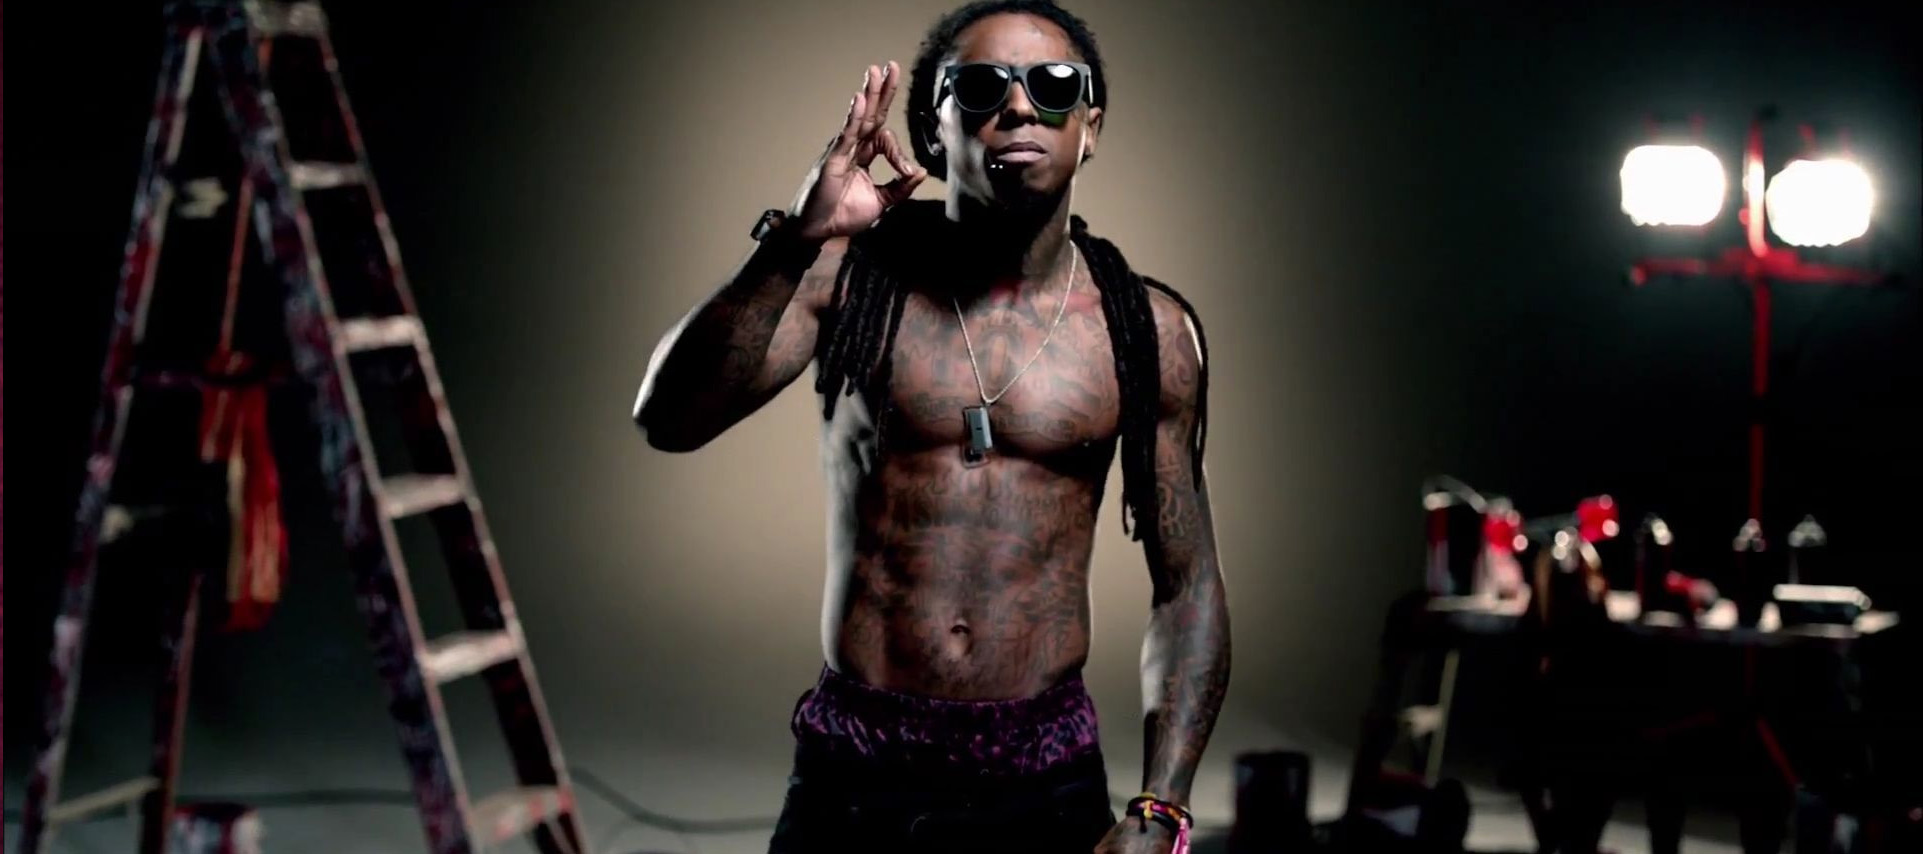 Lil Wayne at Mirage